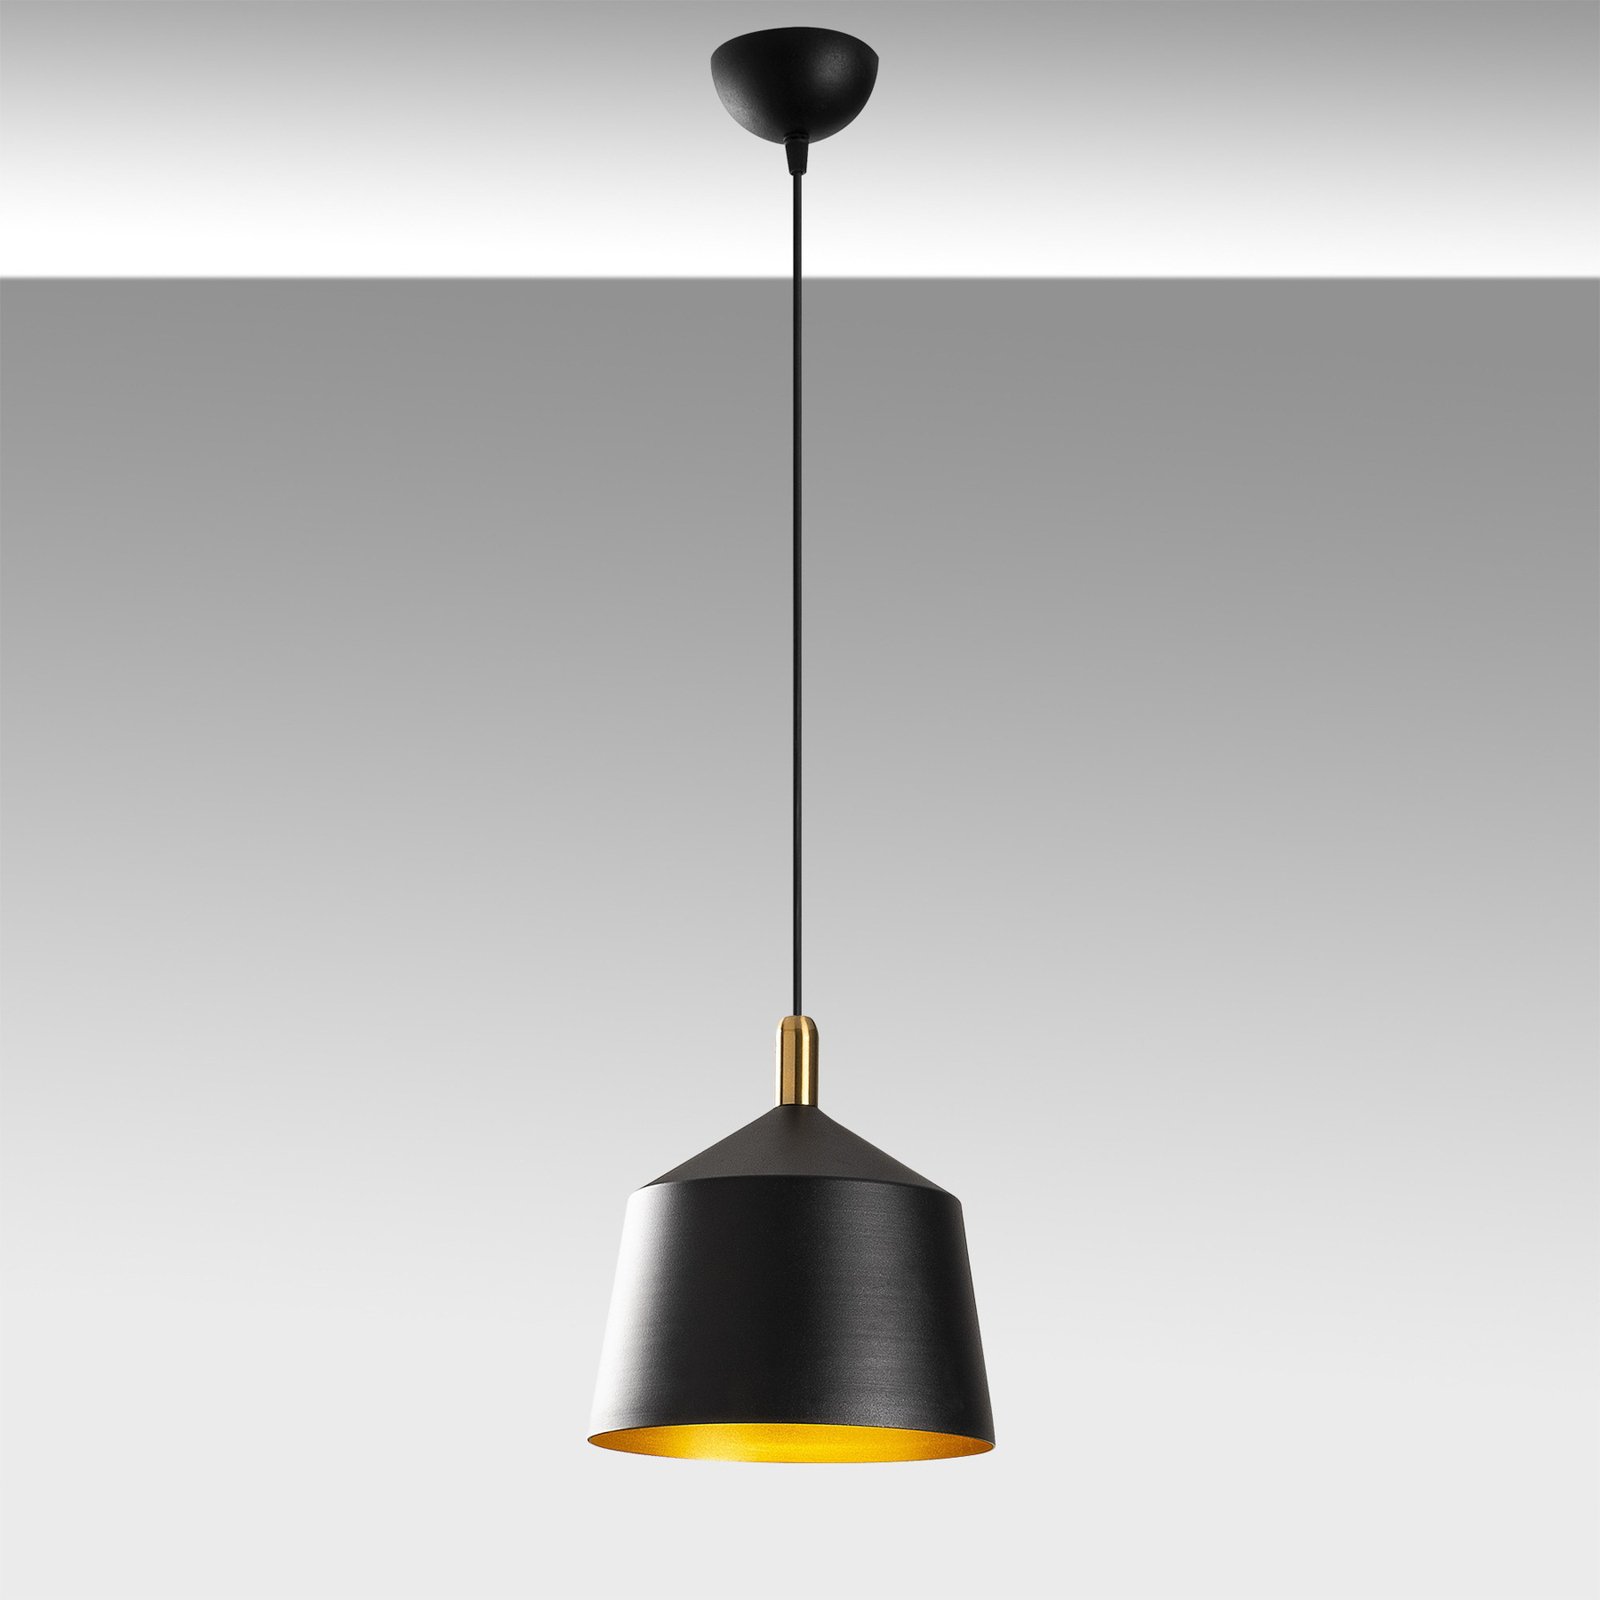 Hanglamp Saglam 3720 1-lamp Ø25cm zwart/goud